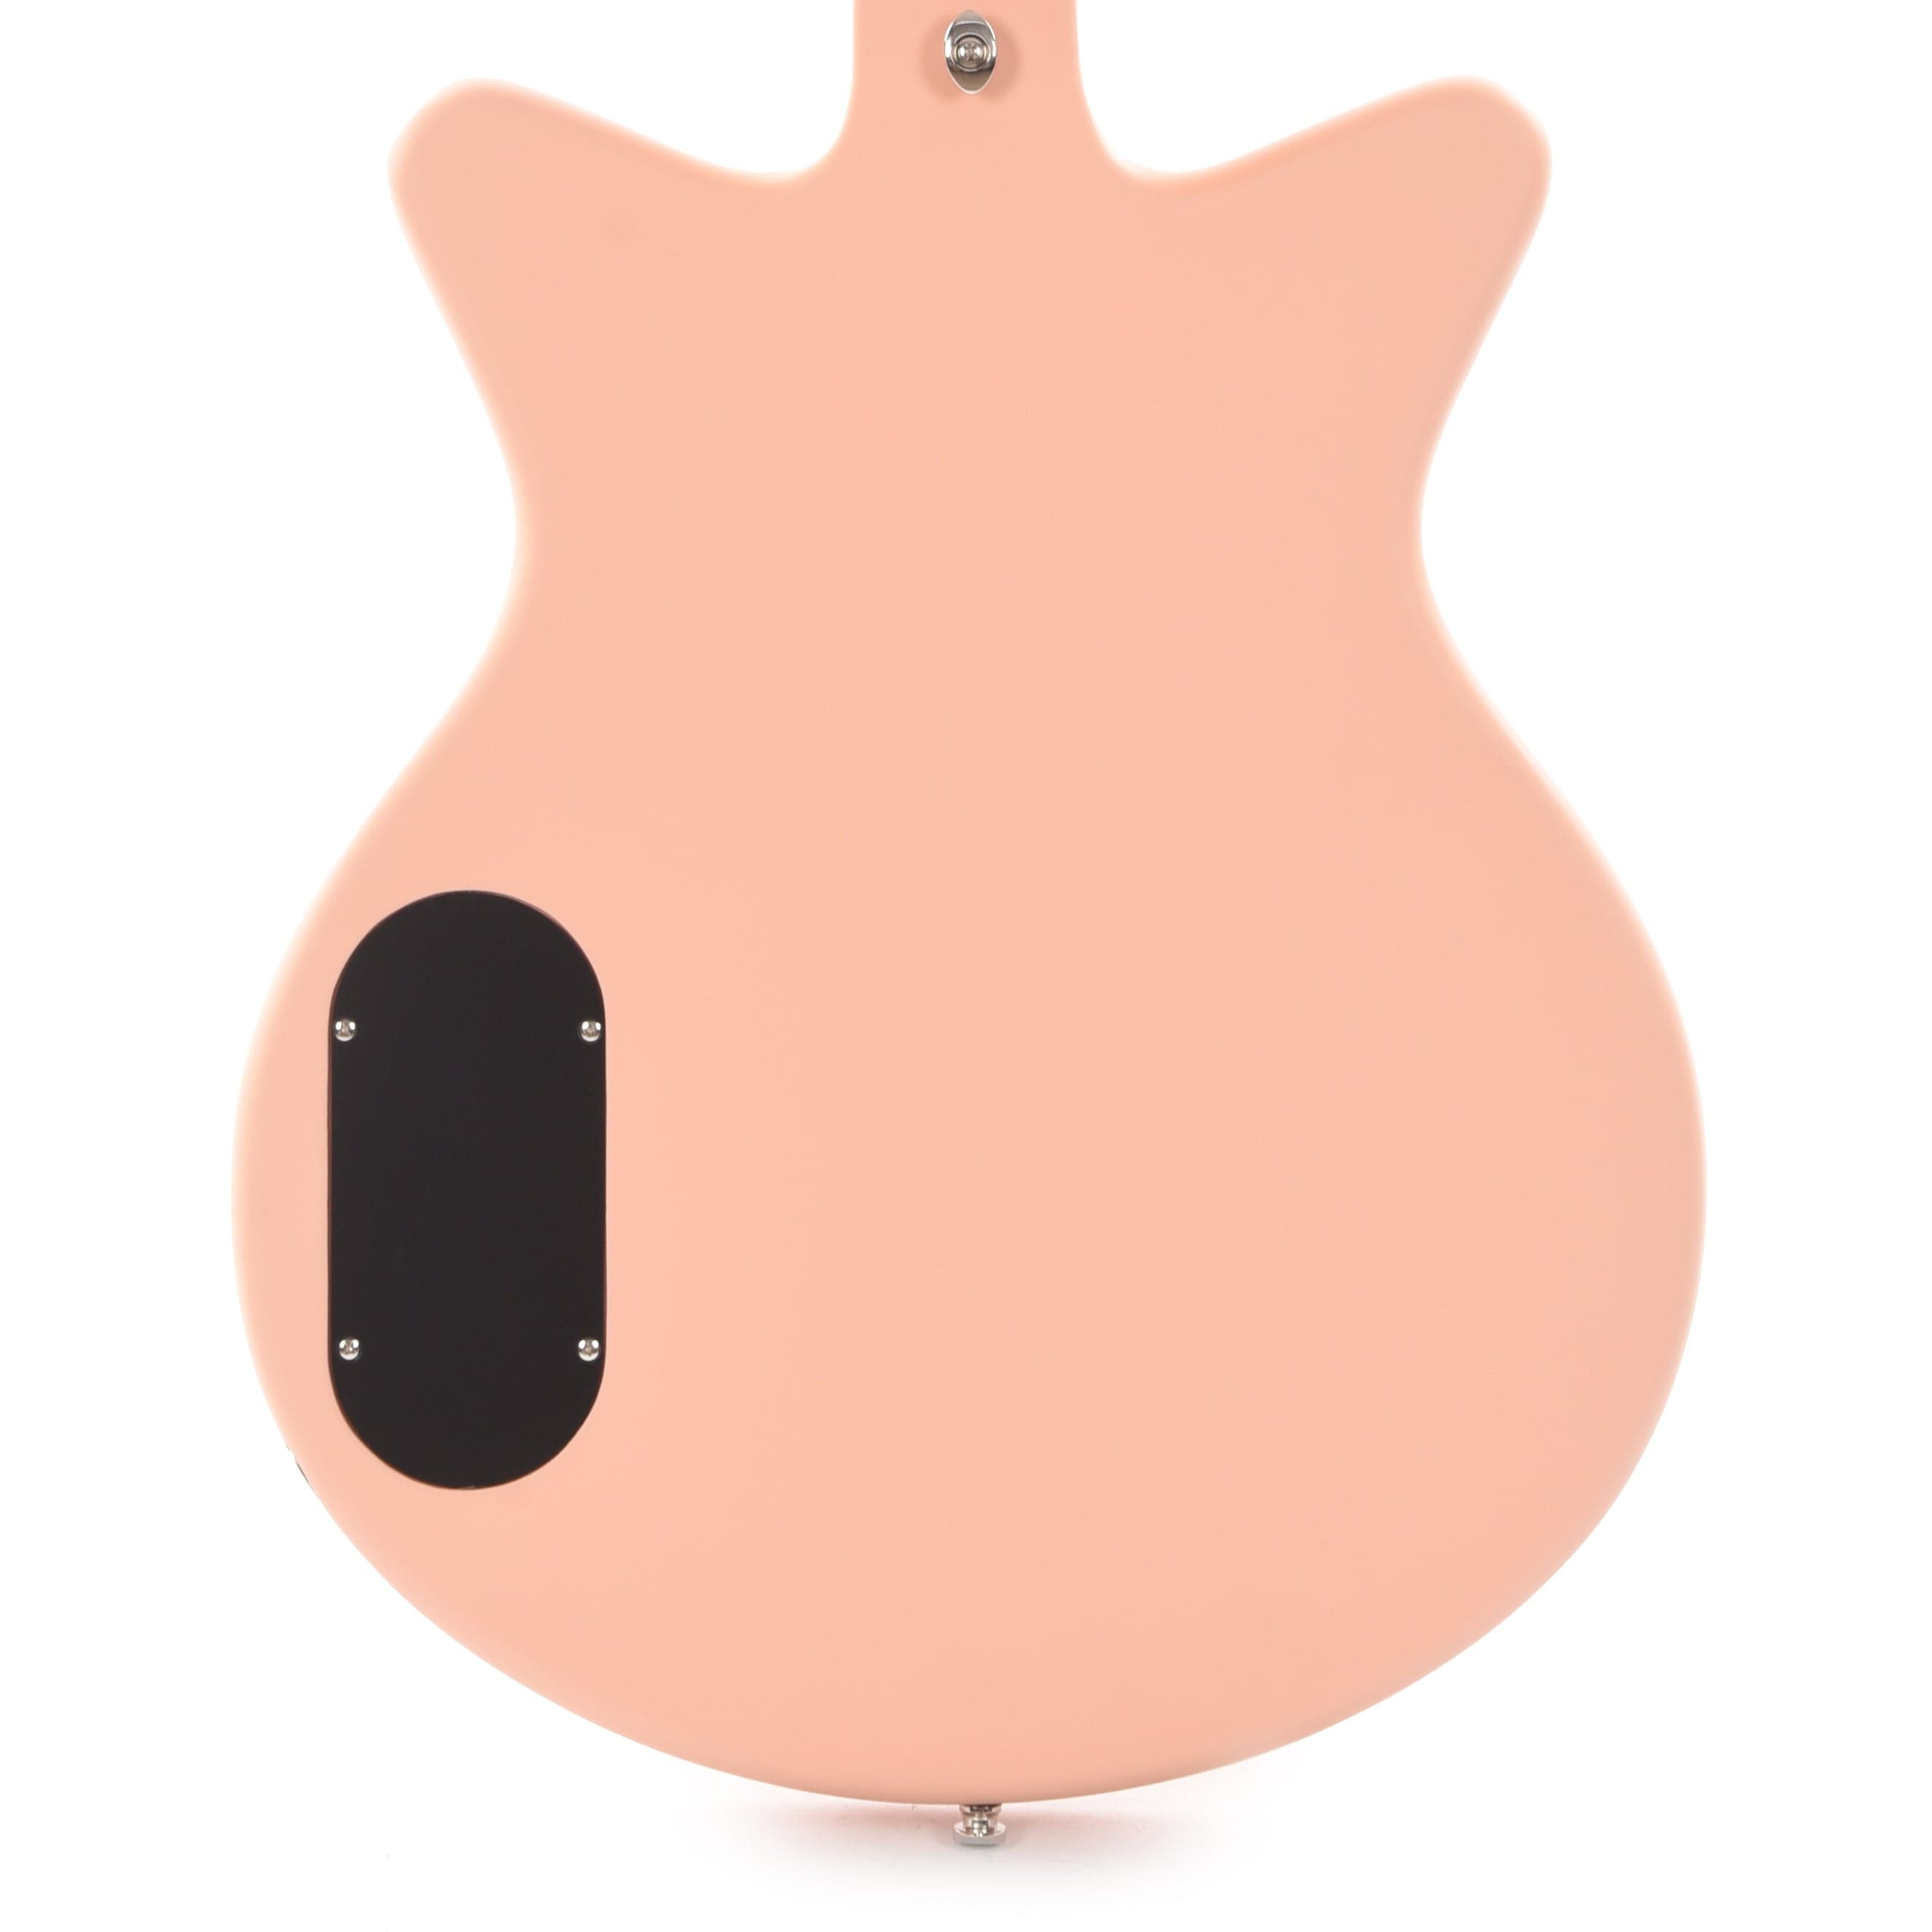 GCI Craftsman Series 4 Guitar Satin Shell Pink Electric Guitars / Solid Body